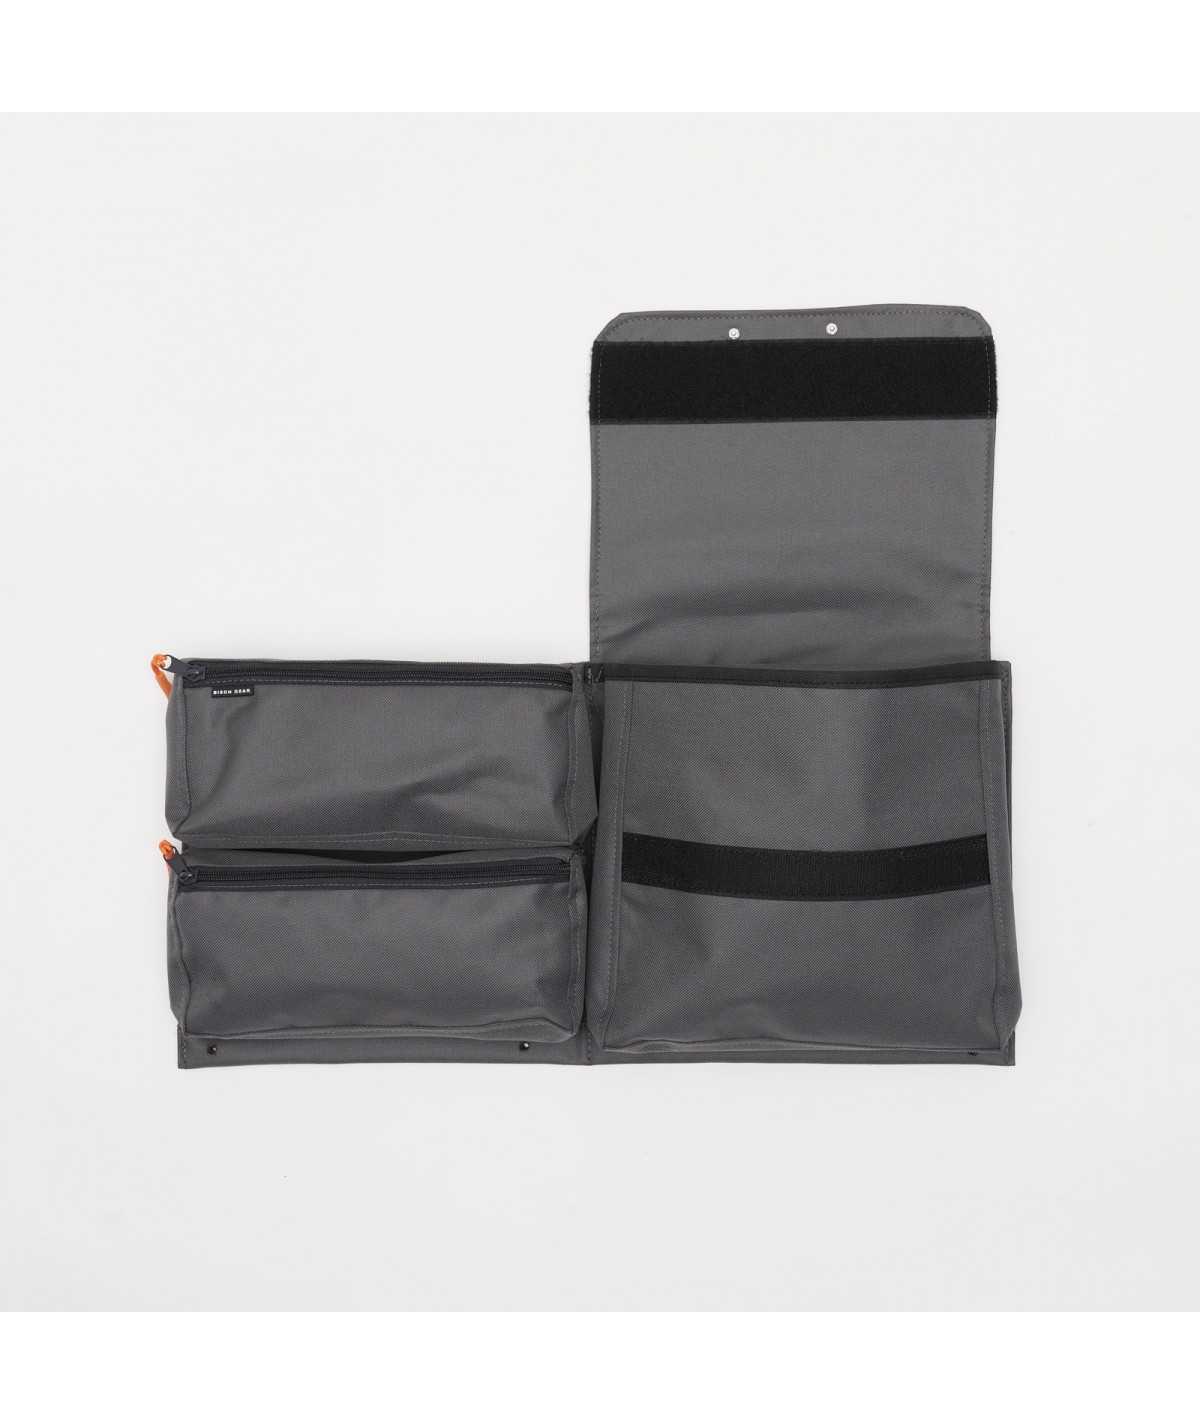 Car Net Pocket Storage Bag Car Windows Suction Cup Hanging Bag